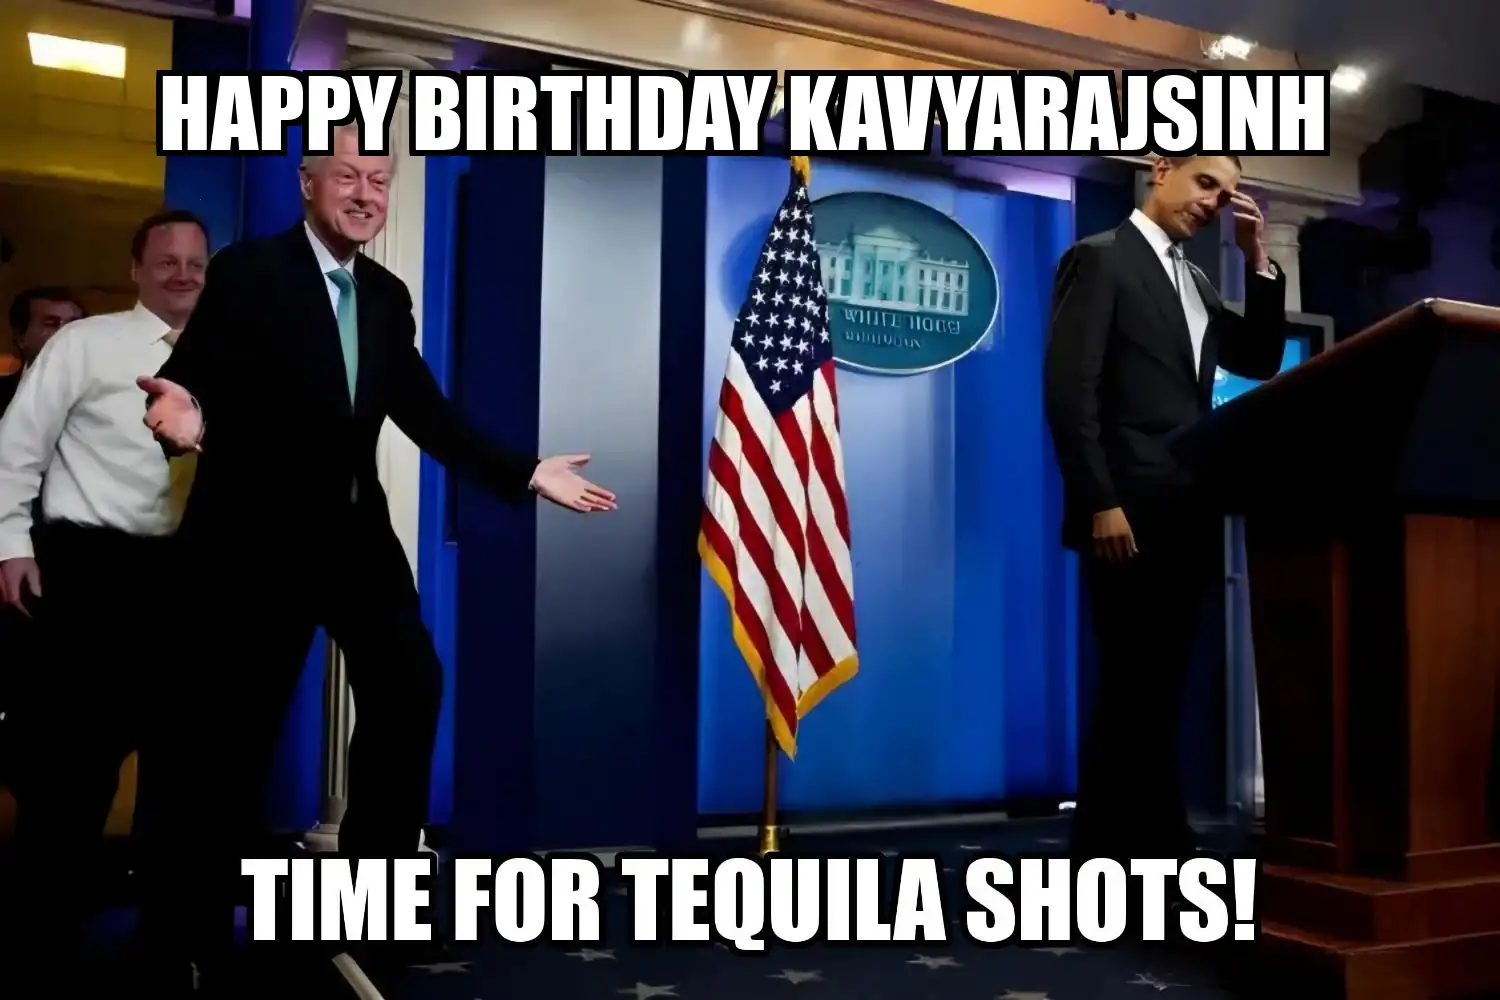 Happy Birthday Kavyarajsinh Time For Tequila Shots Memes